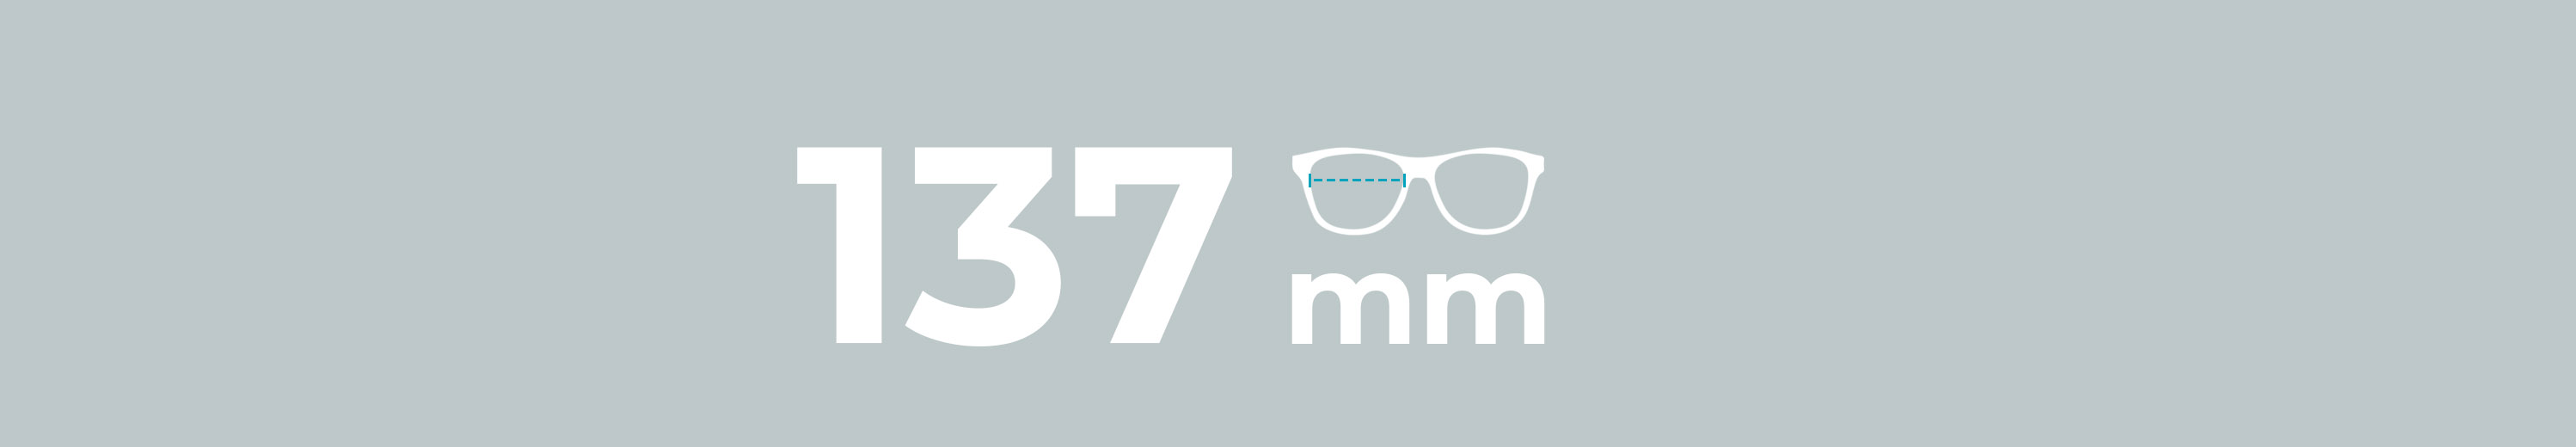 Lens Size: 137mm Glasses